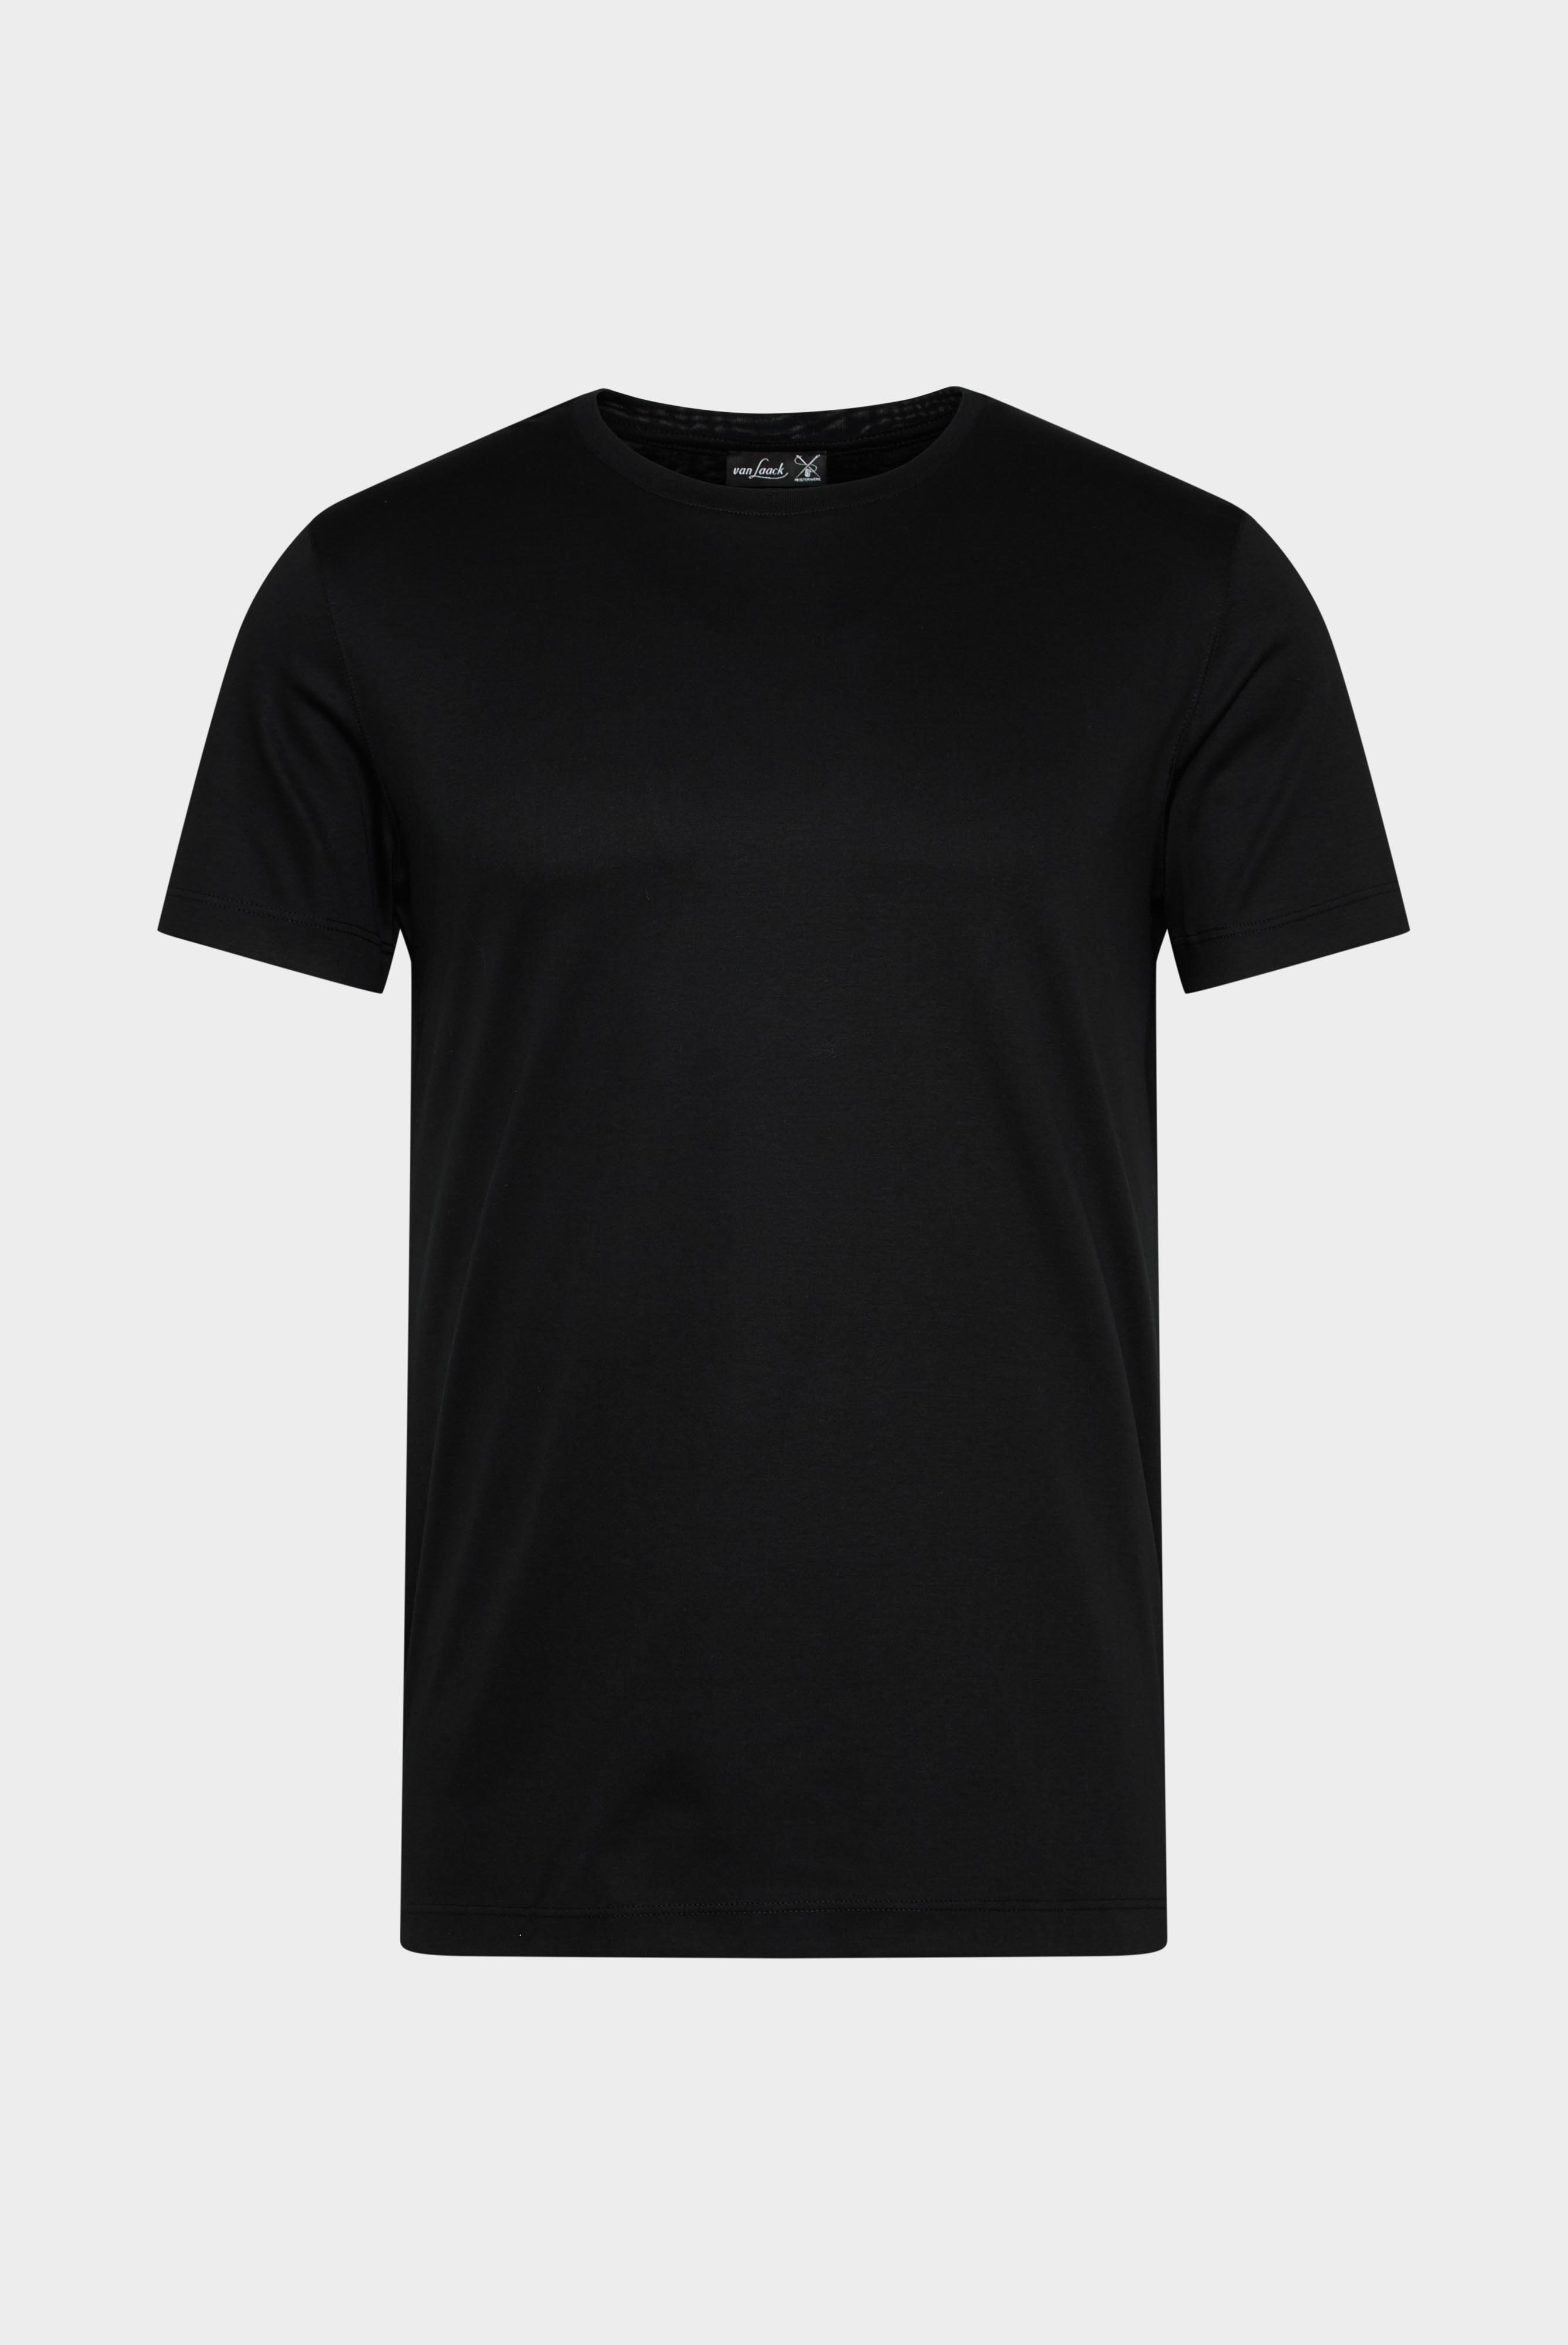 T-Shirts+Swiss Cotton Jersey Crew Neck T-Shirt+20.1717.UX.180031.099.XXL